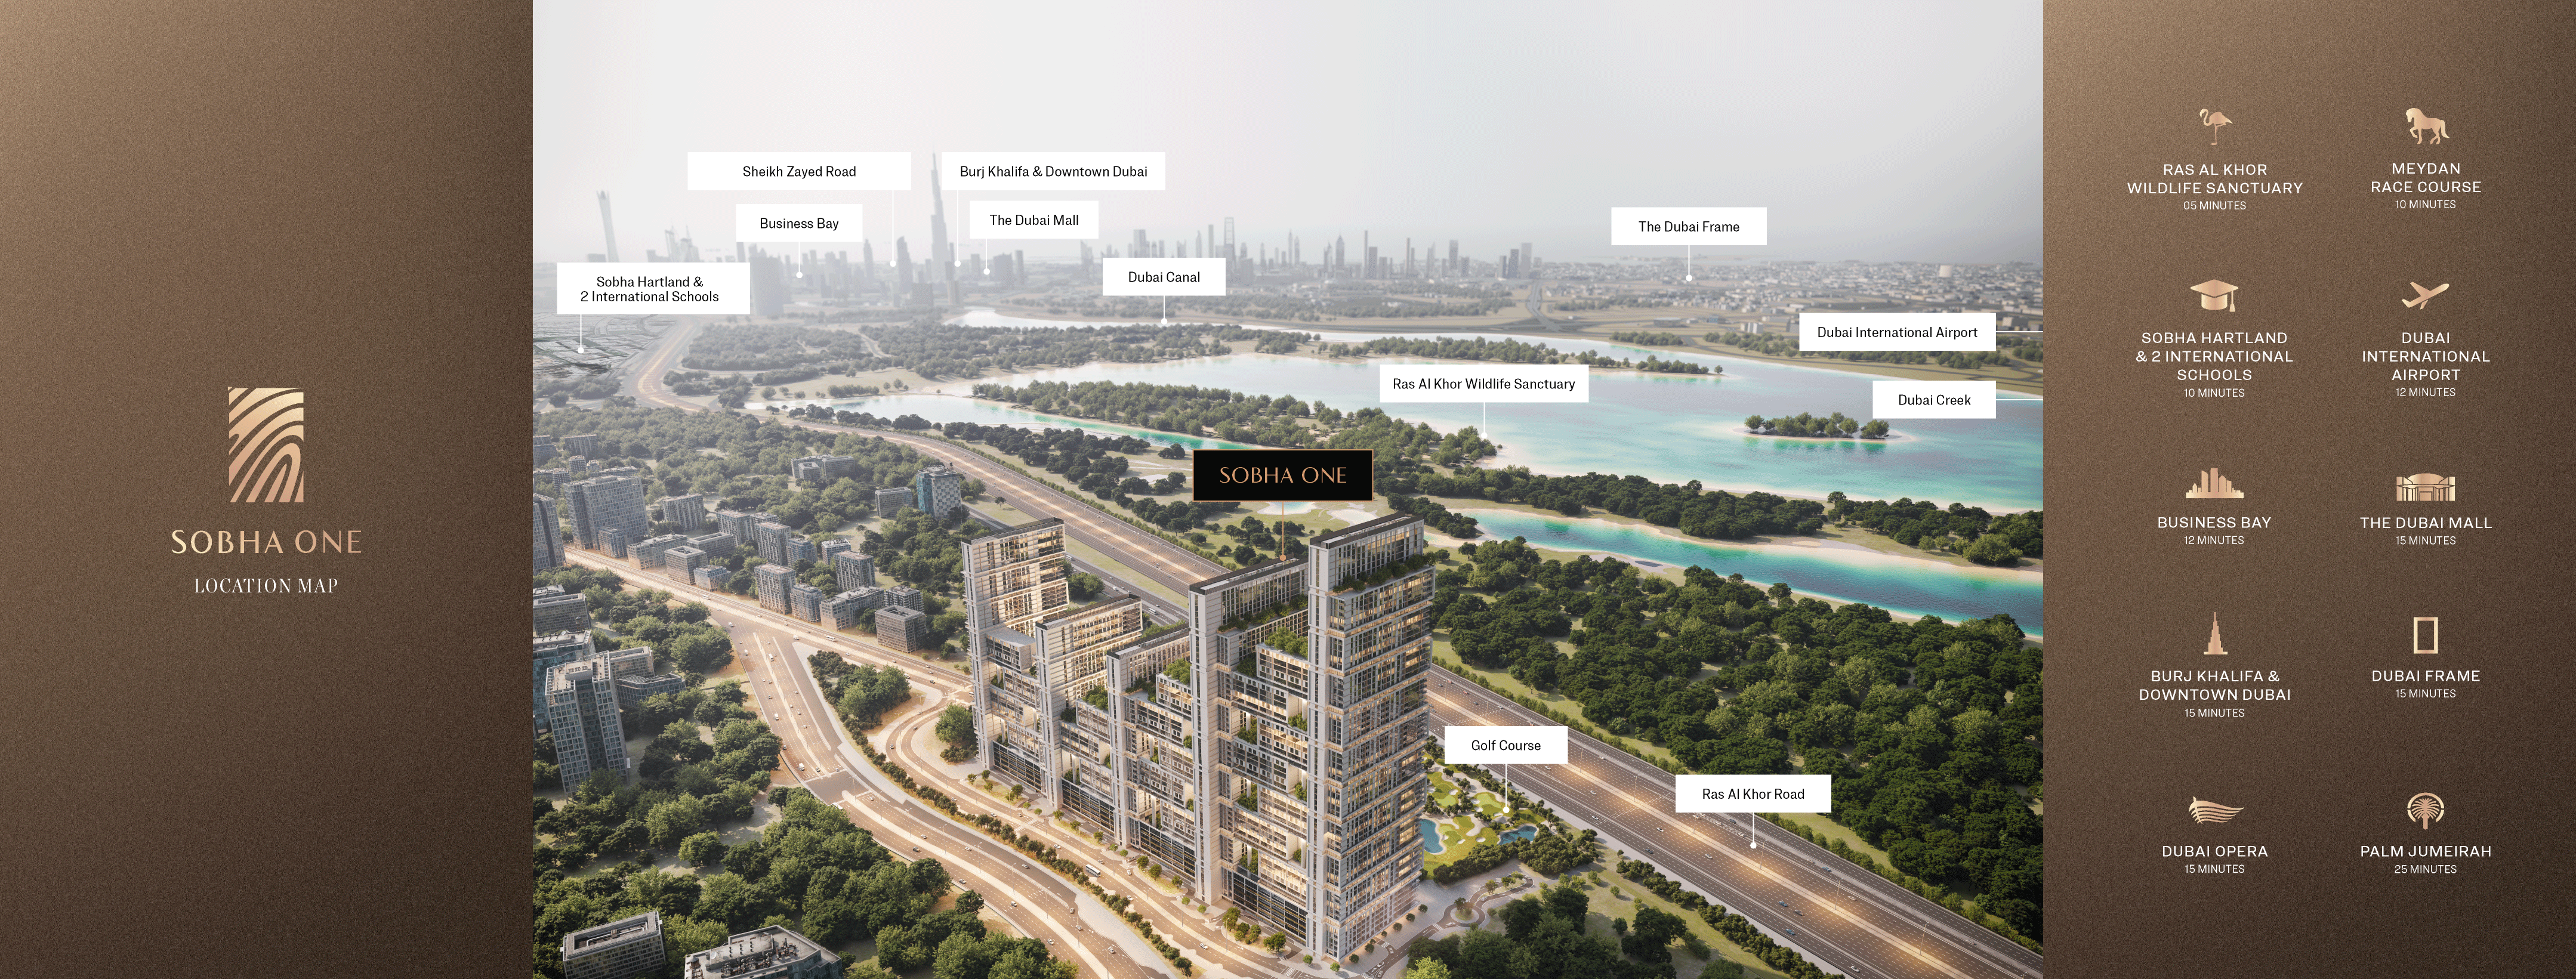 Sobha One Dubai Real Estate